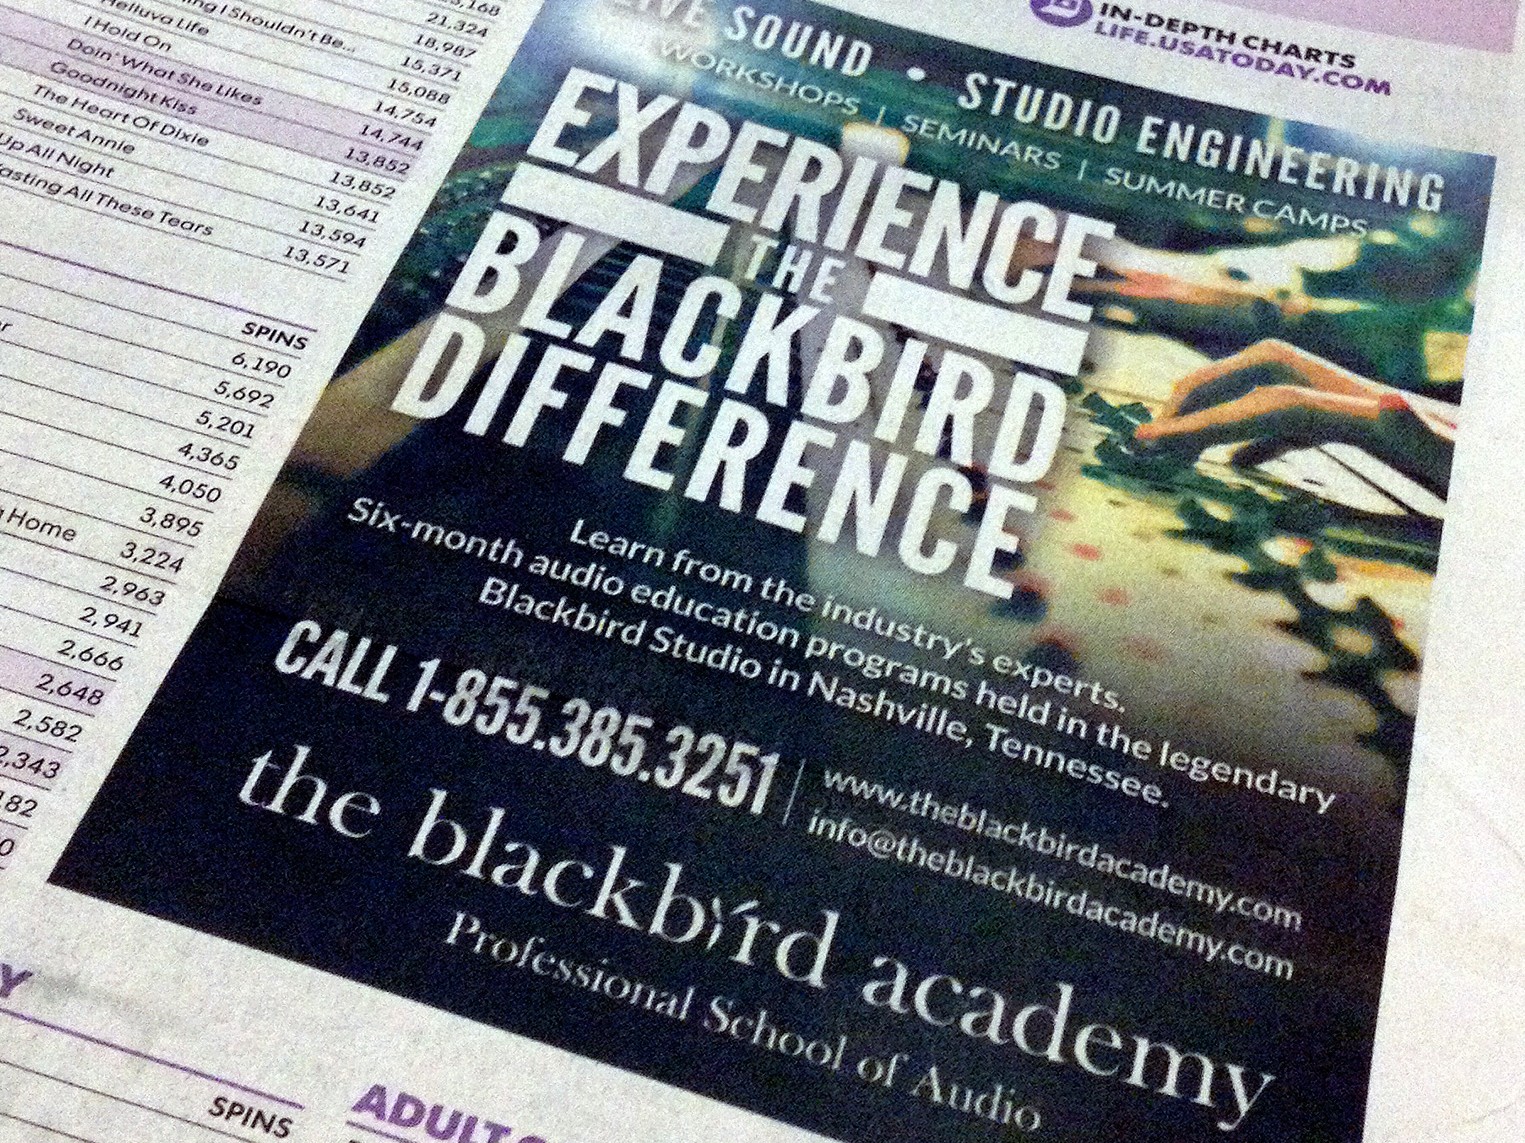 The Blackbird Academy, USA Today ad